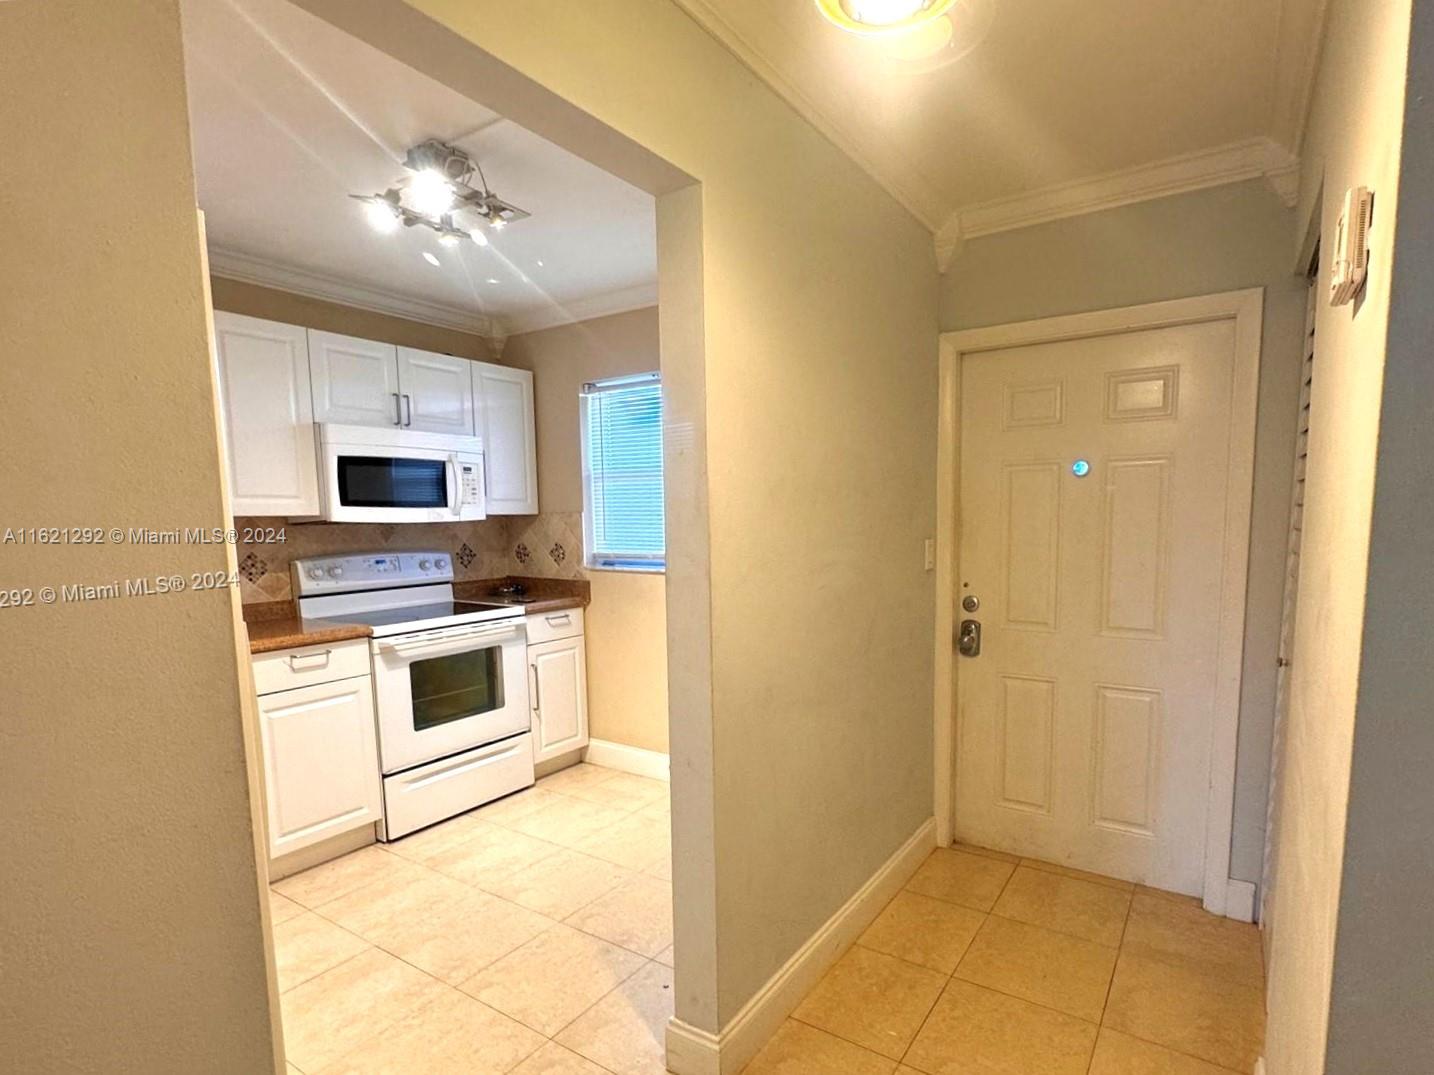 Rental Property at 1751 Nw 75th Ave 310, Plantation, Miami-Dade County, Florida - Bedrooms: 1 
Bathrooms: 2  - $1,799 MO.